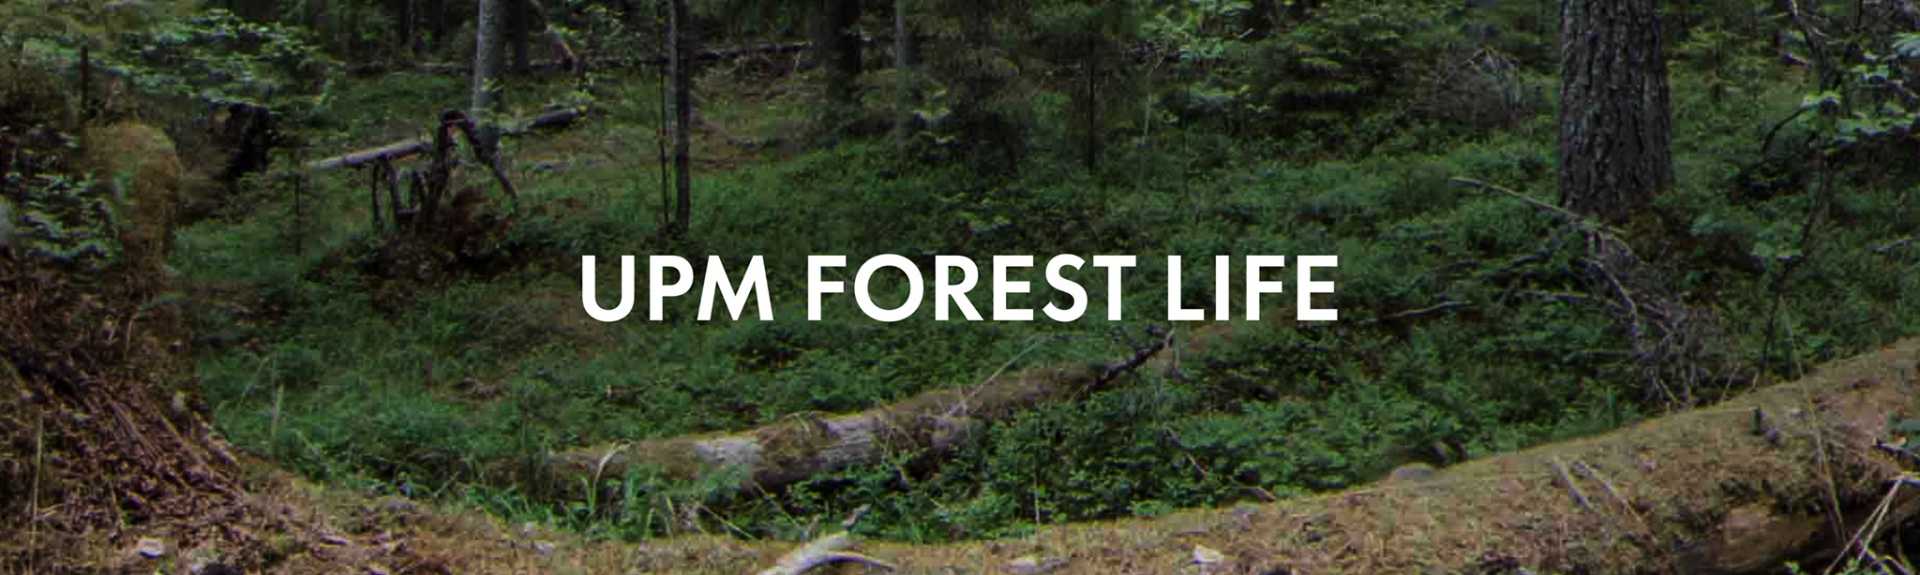 UPM Forest life